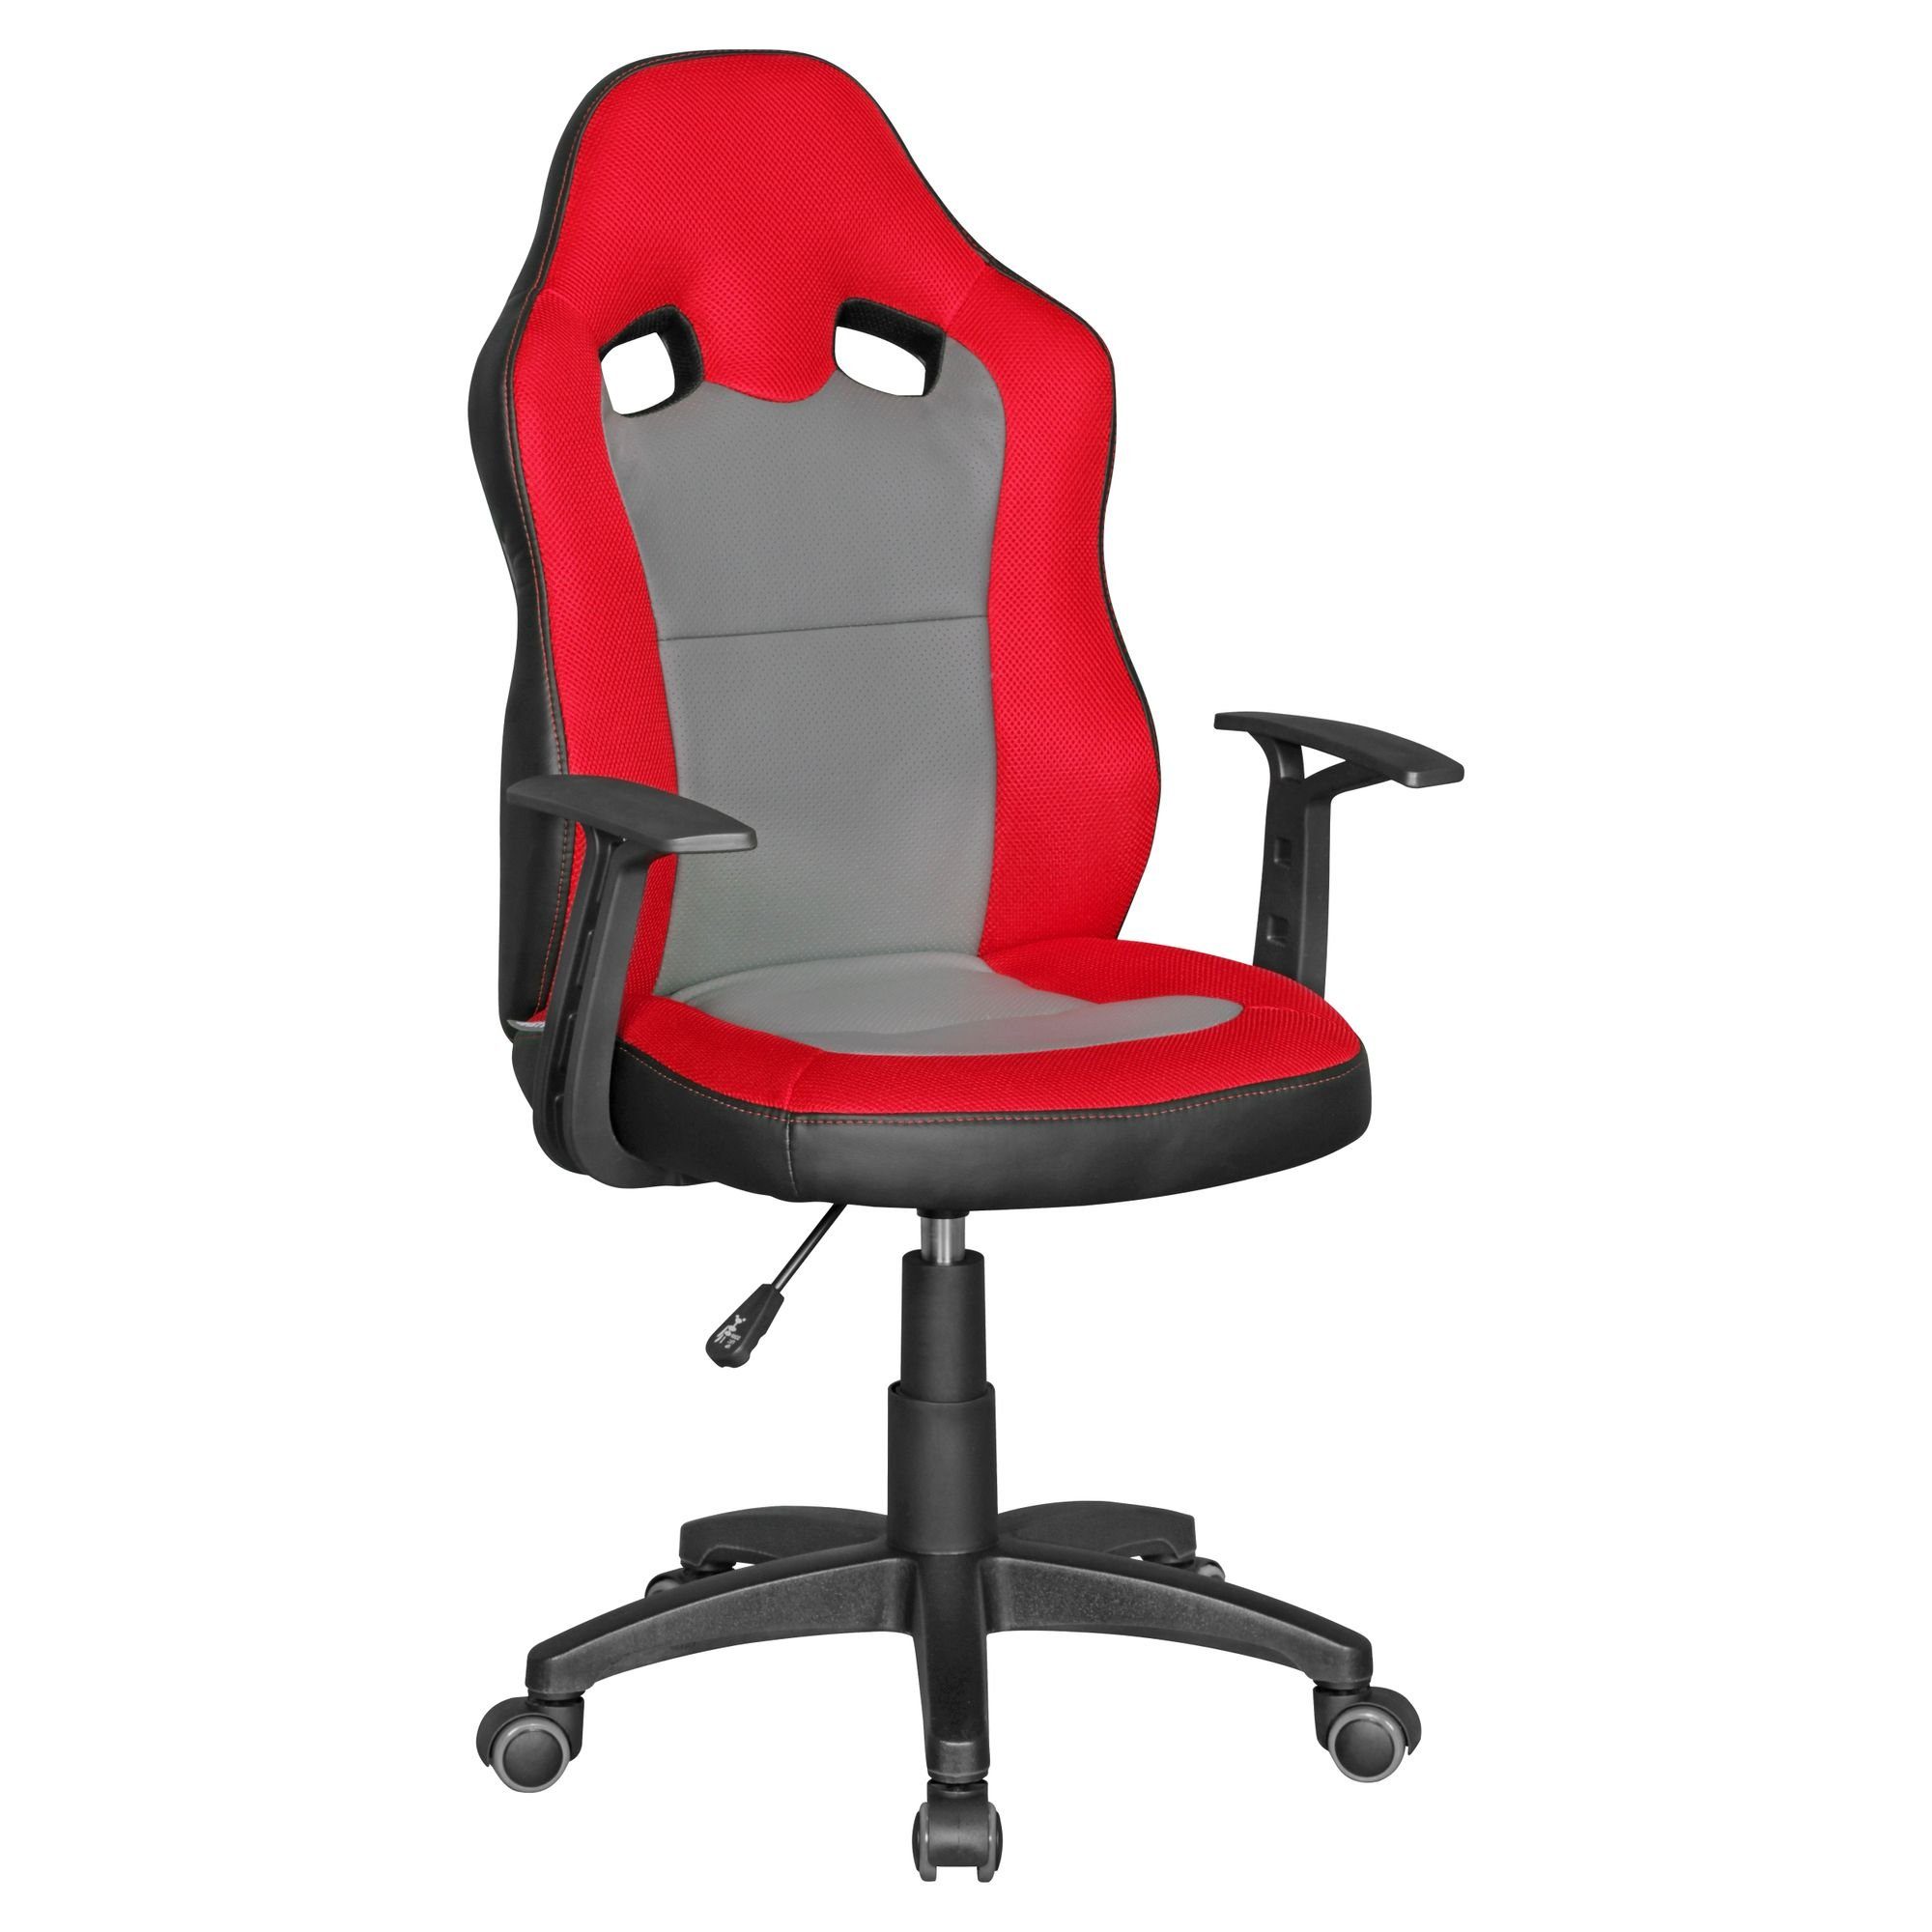 höhenverstellbar, Rot Grau FAST Kinder-Stuhl Ergonomisch, | Rot, KADIMA mit DESIGN Kinderstuhl - Armlehnen